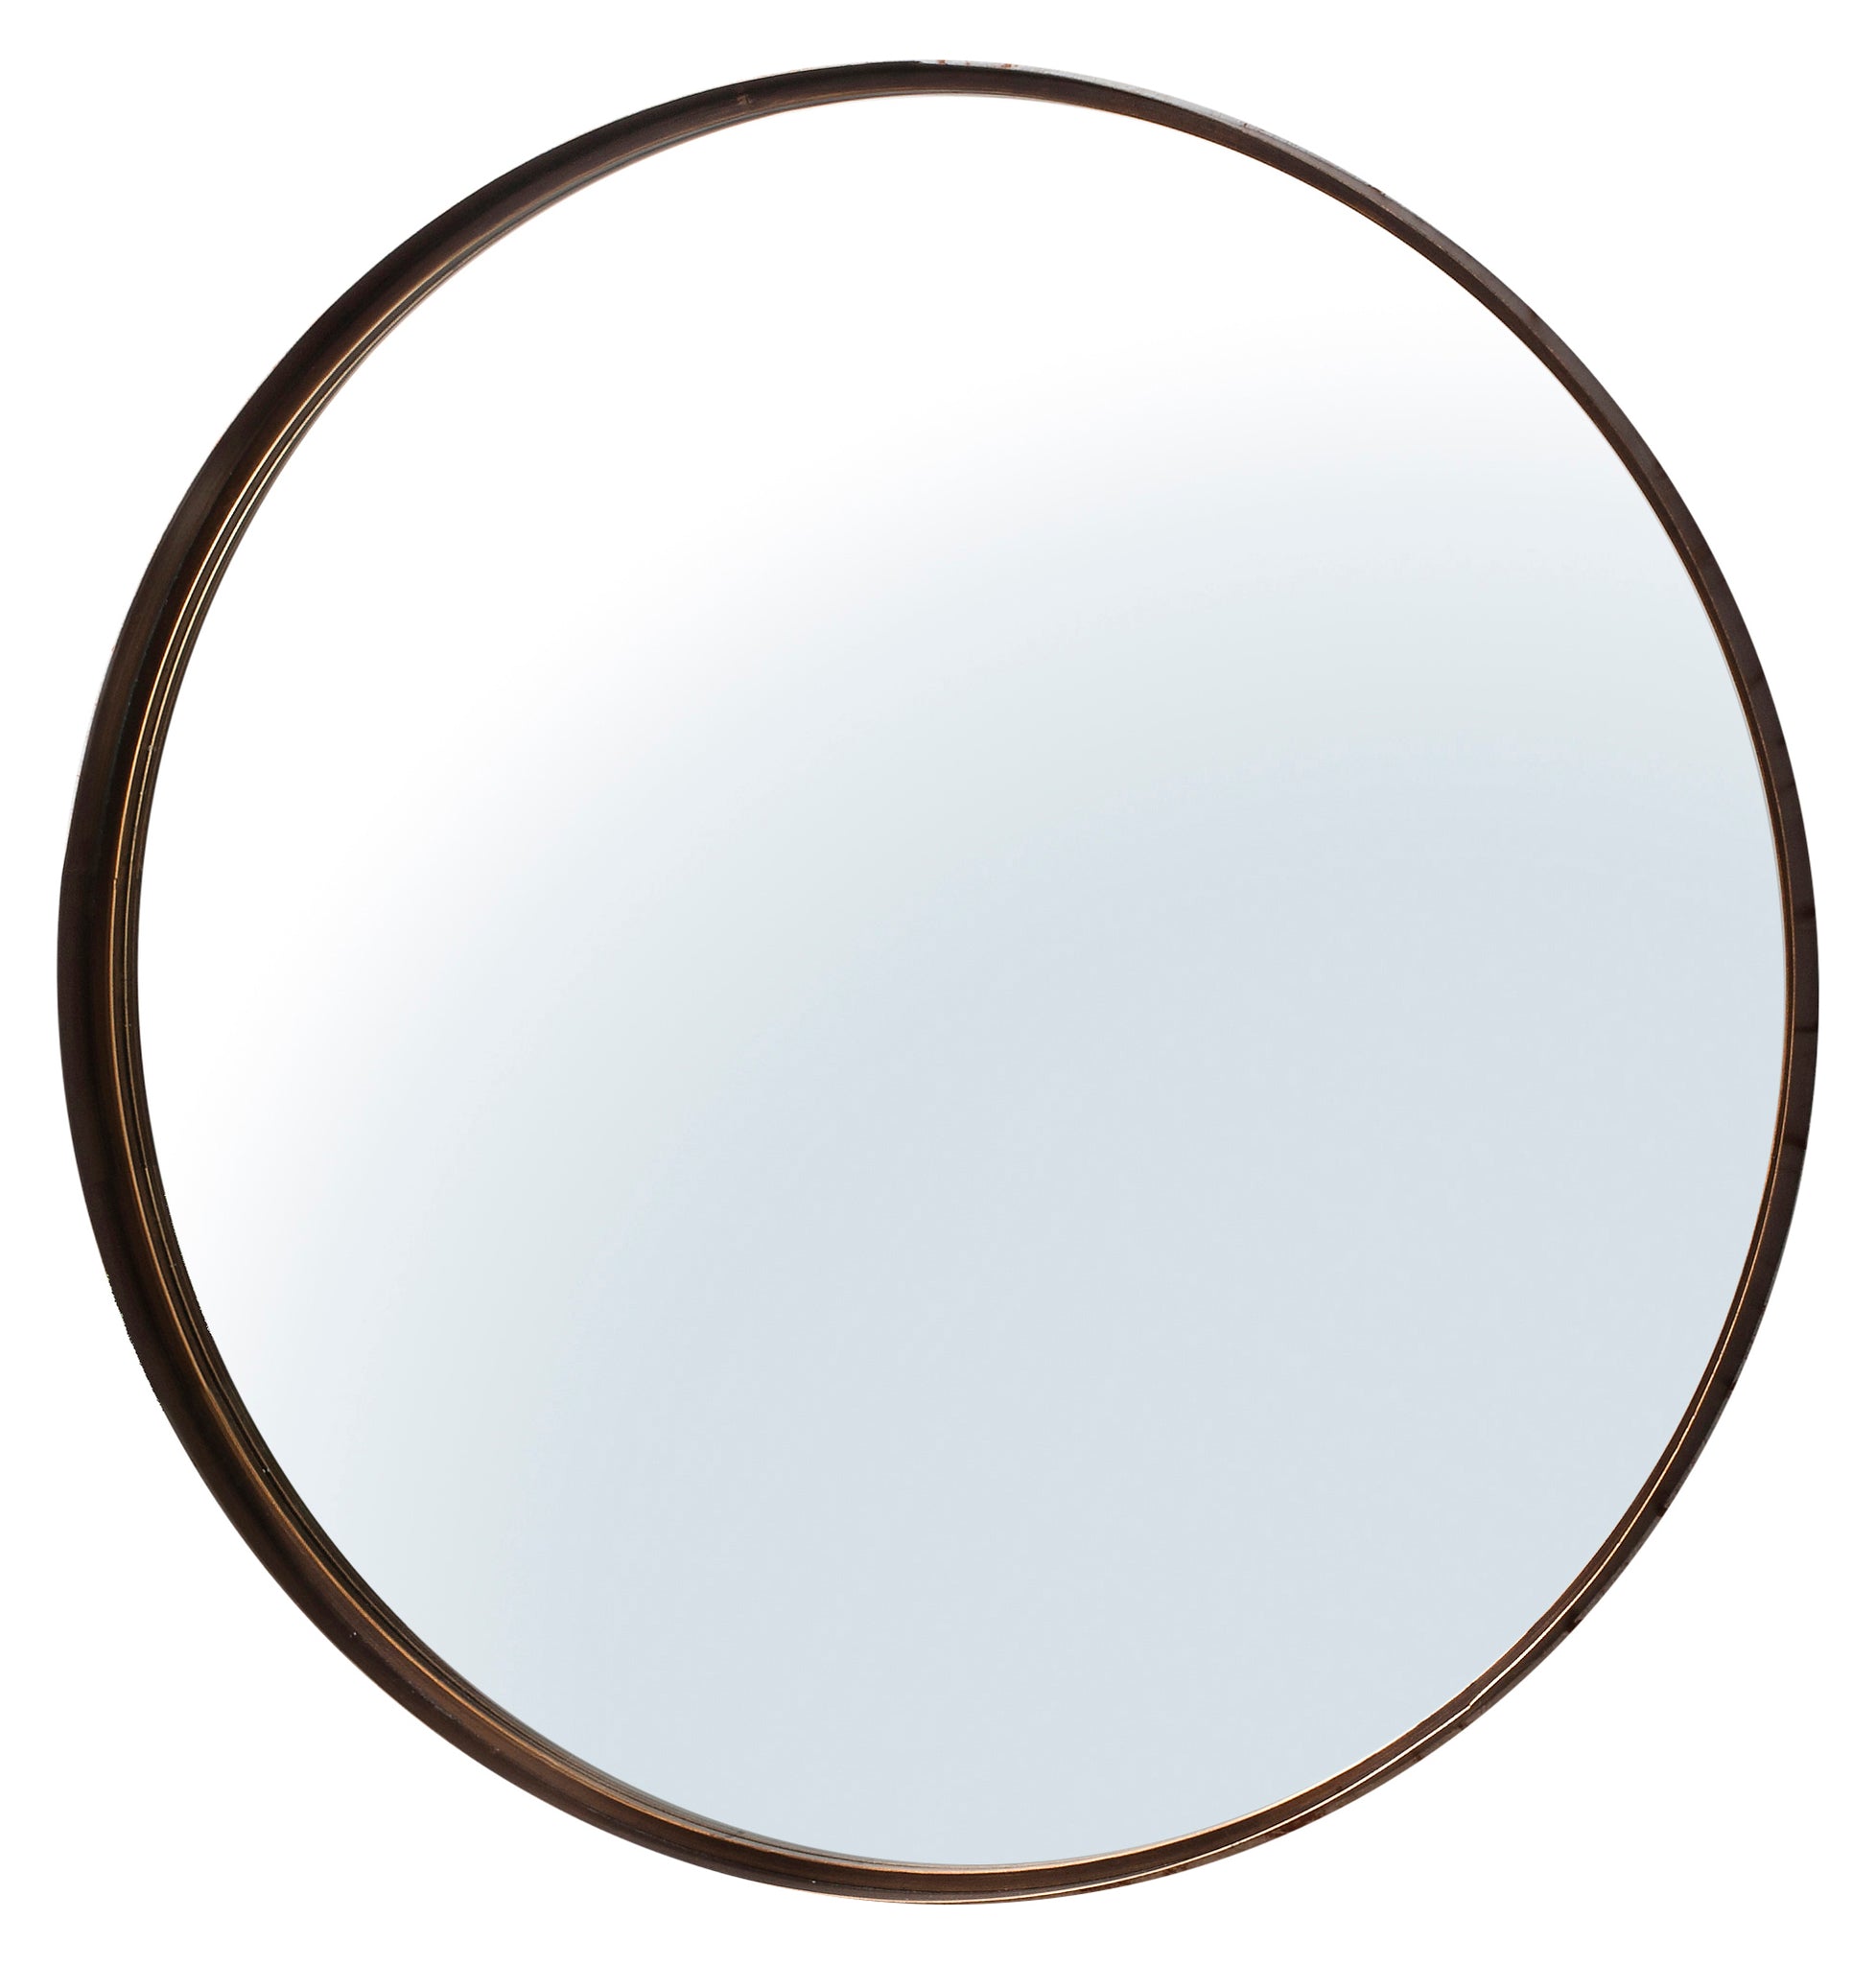 Greystoke Round Mirror Black